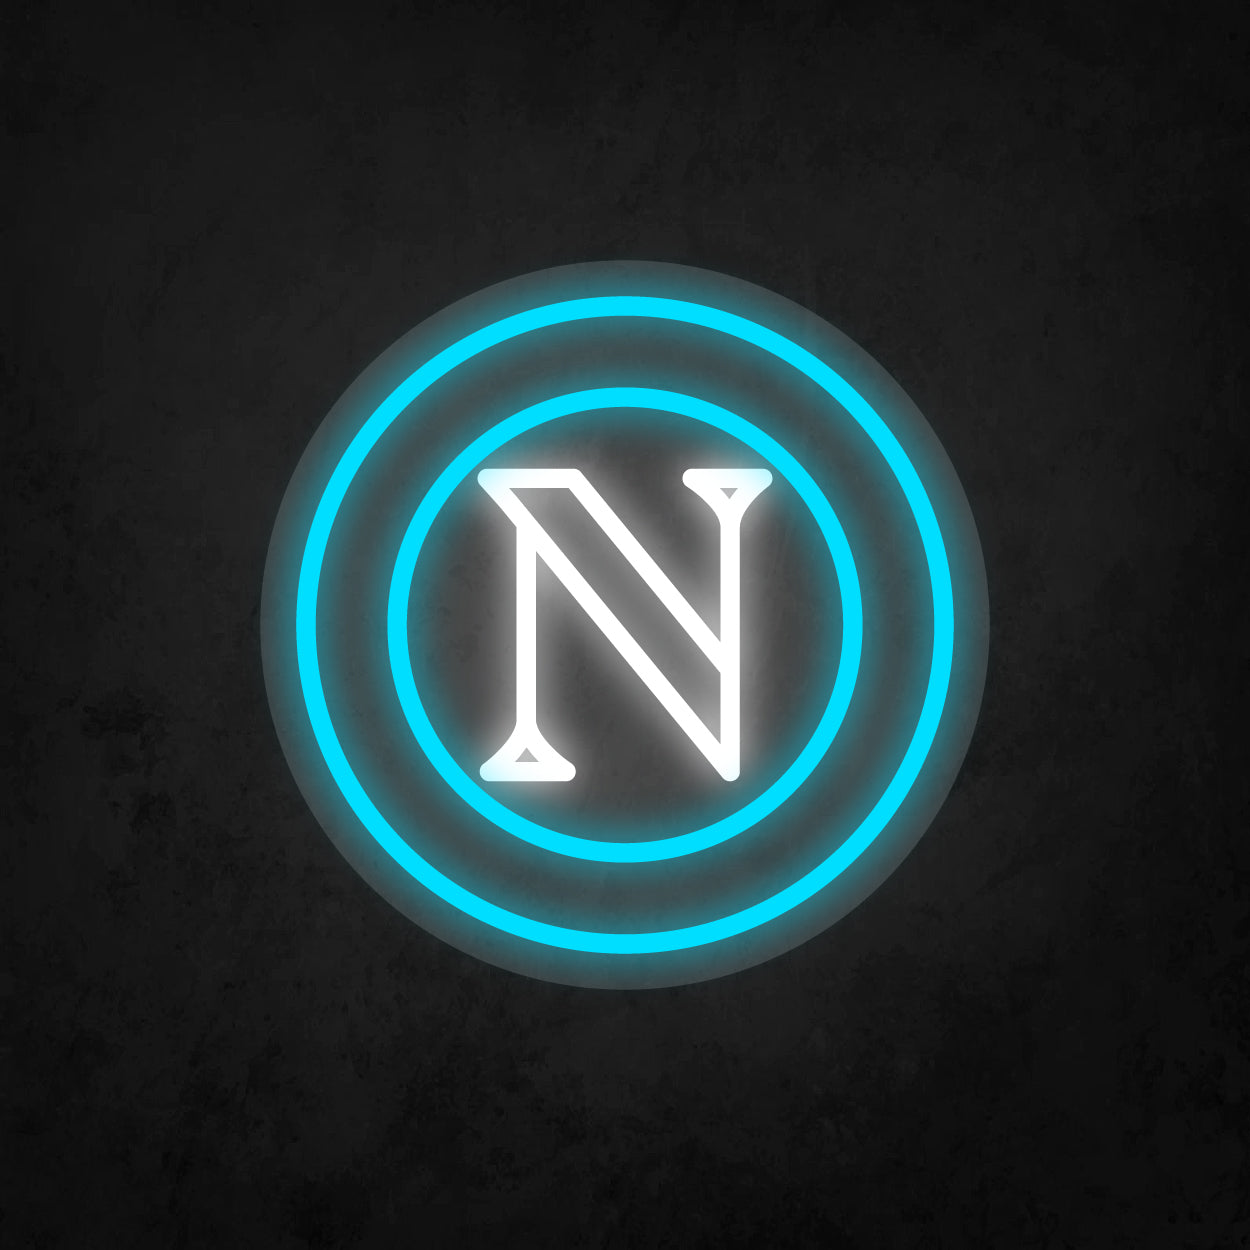 LED Neon Sign - Napoli - Small